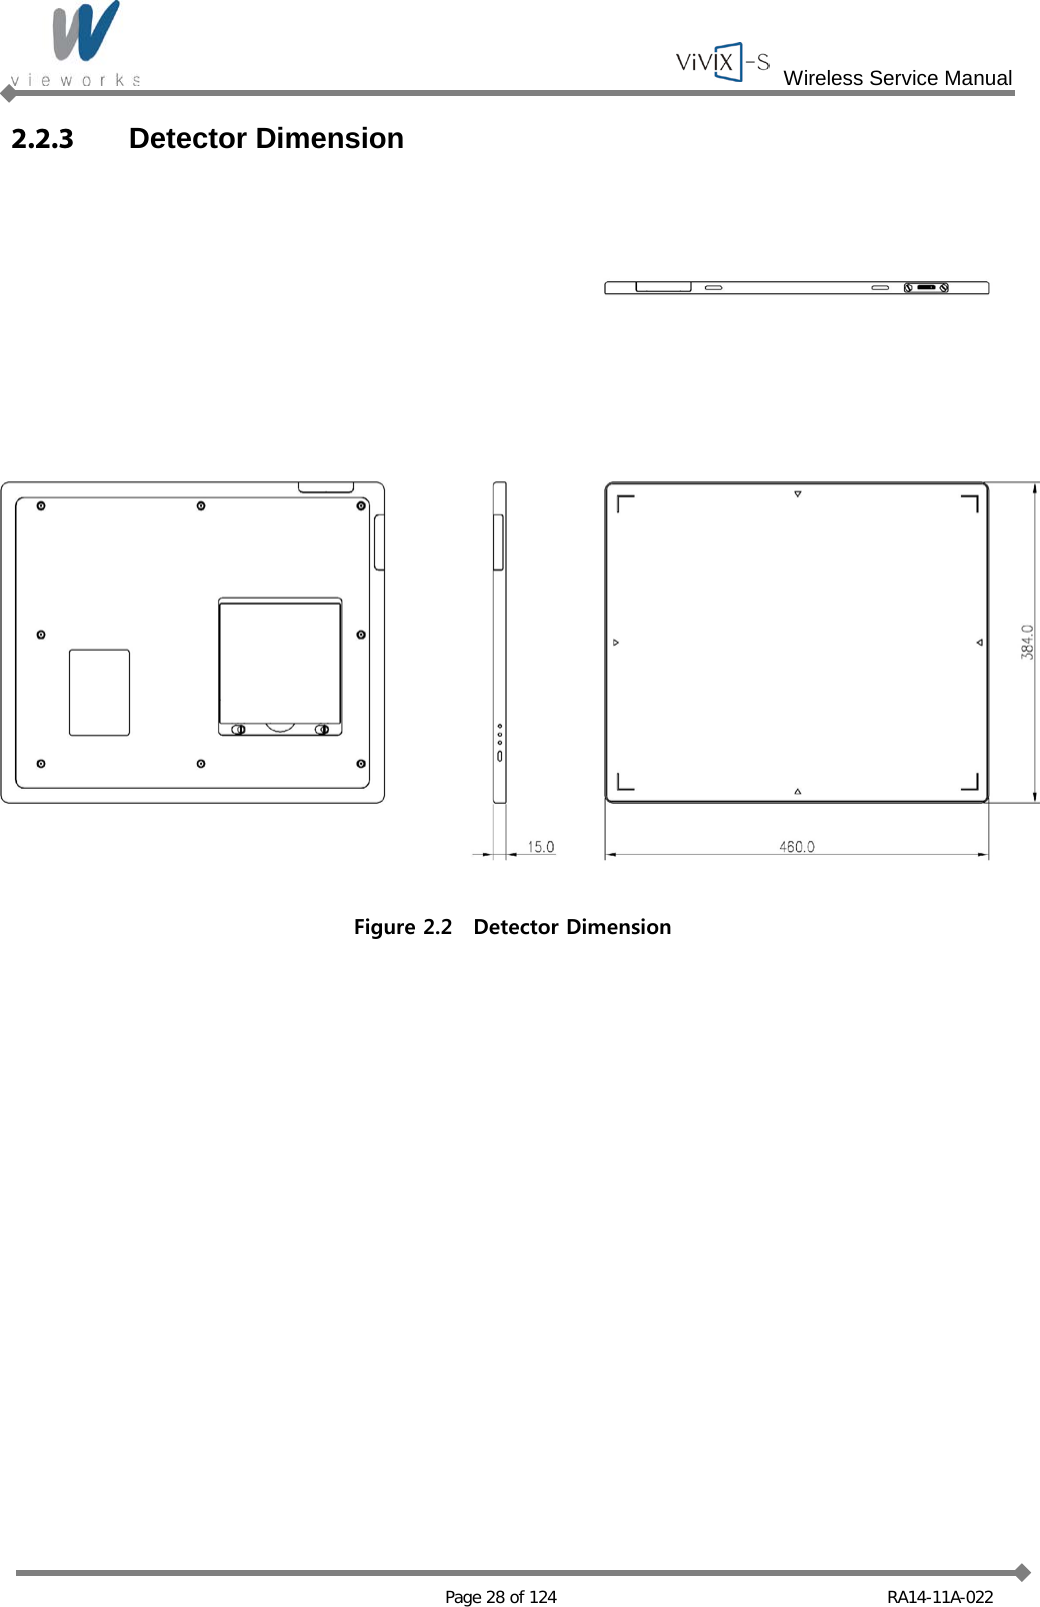  Wireless Service Manual   Page 28 of 124 RA14-11A-022 2.2.3 Detector Dimension  Figure 2.2  Detector Dimension   